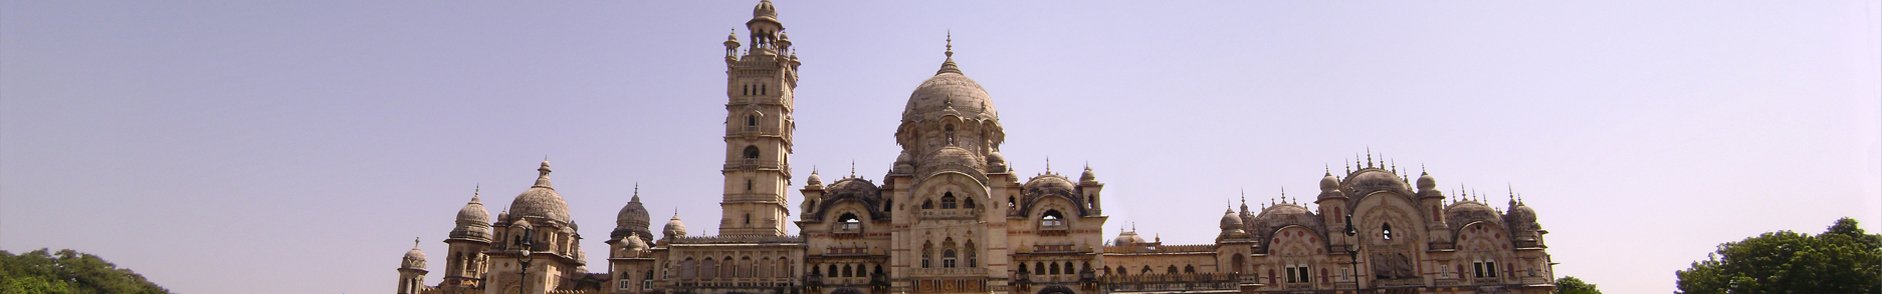 Museums in Vadodara, Gujarat